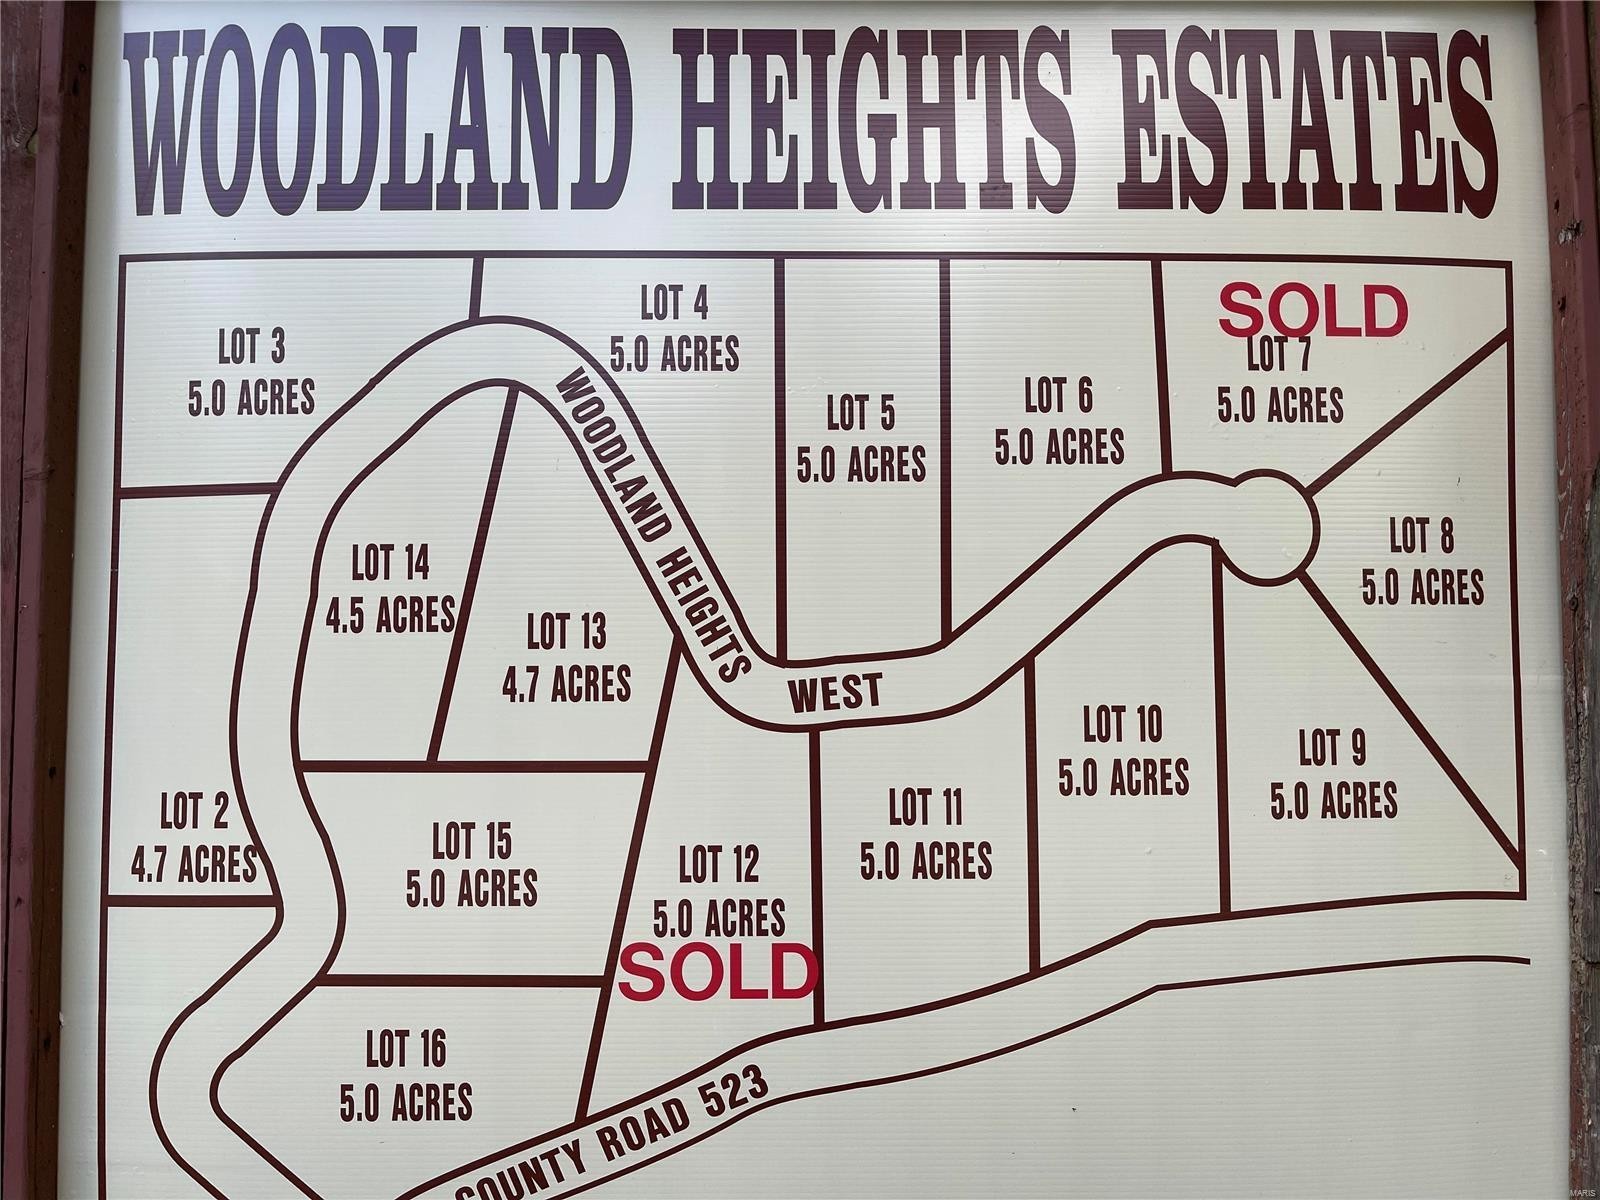 1. 1 Woodland Heights